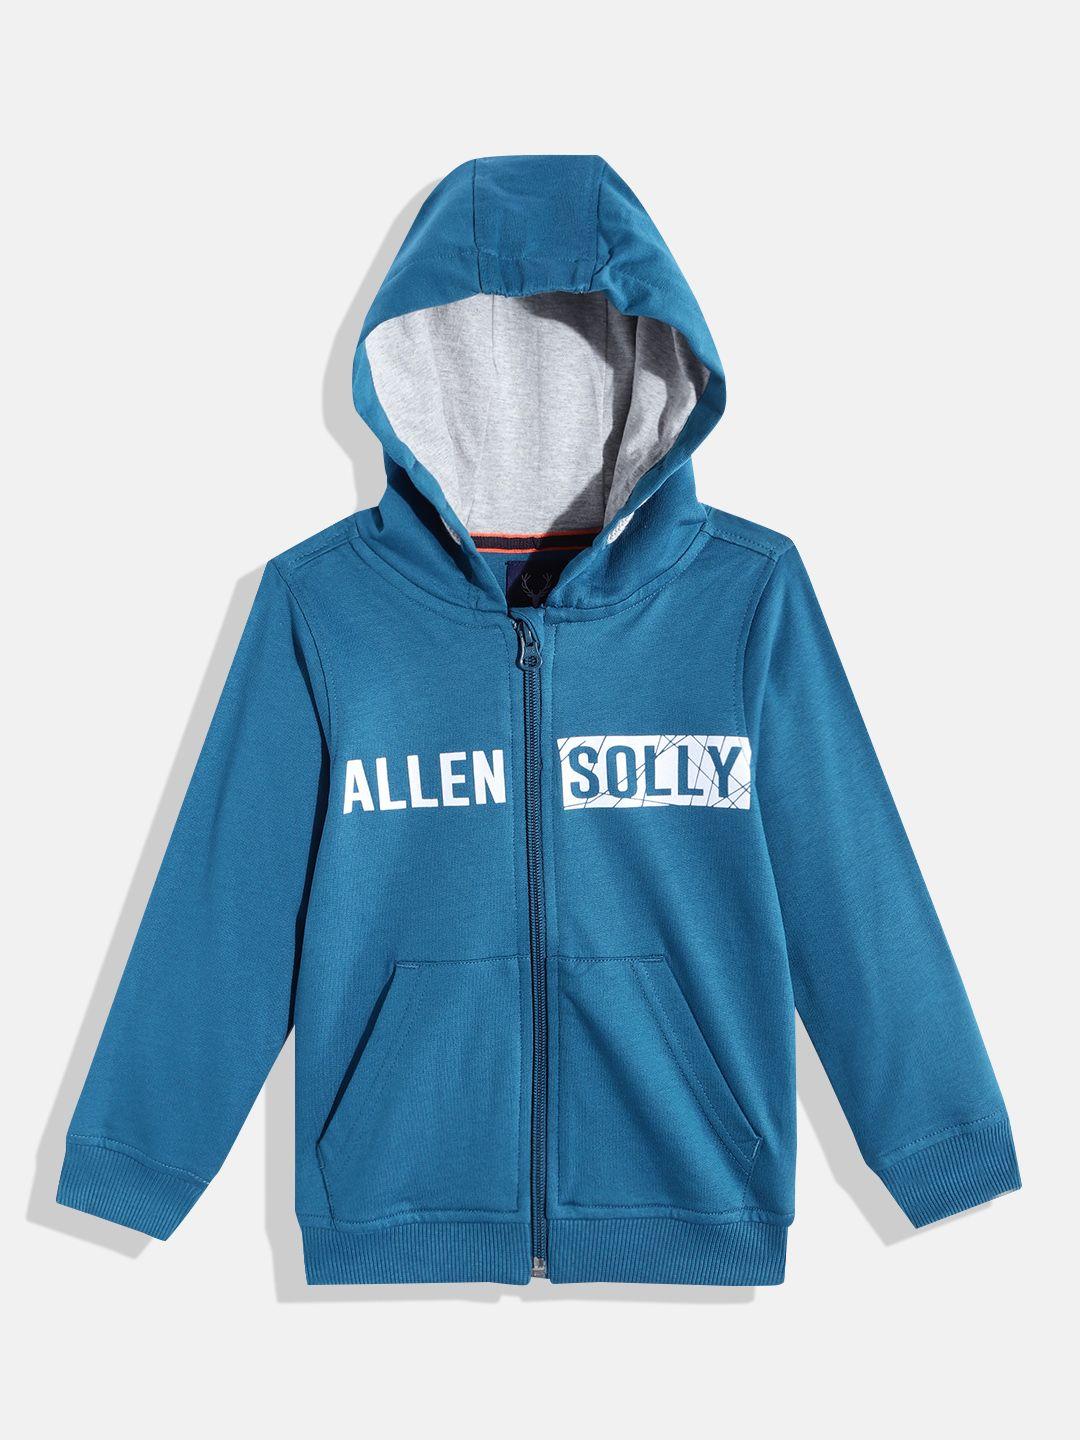 allen solly junior boys teal blue & white pure cotton brand logo print hooded sweatshirt